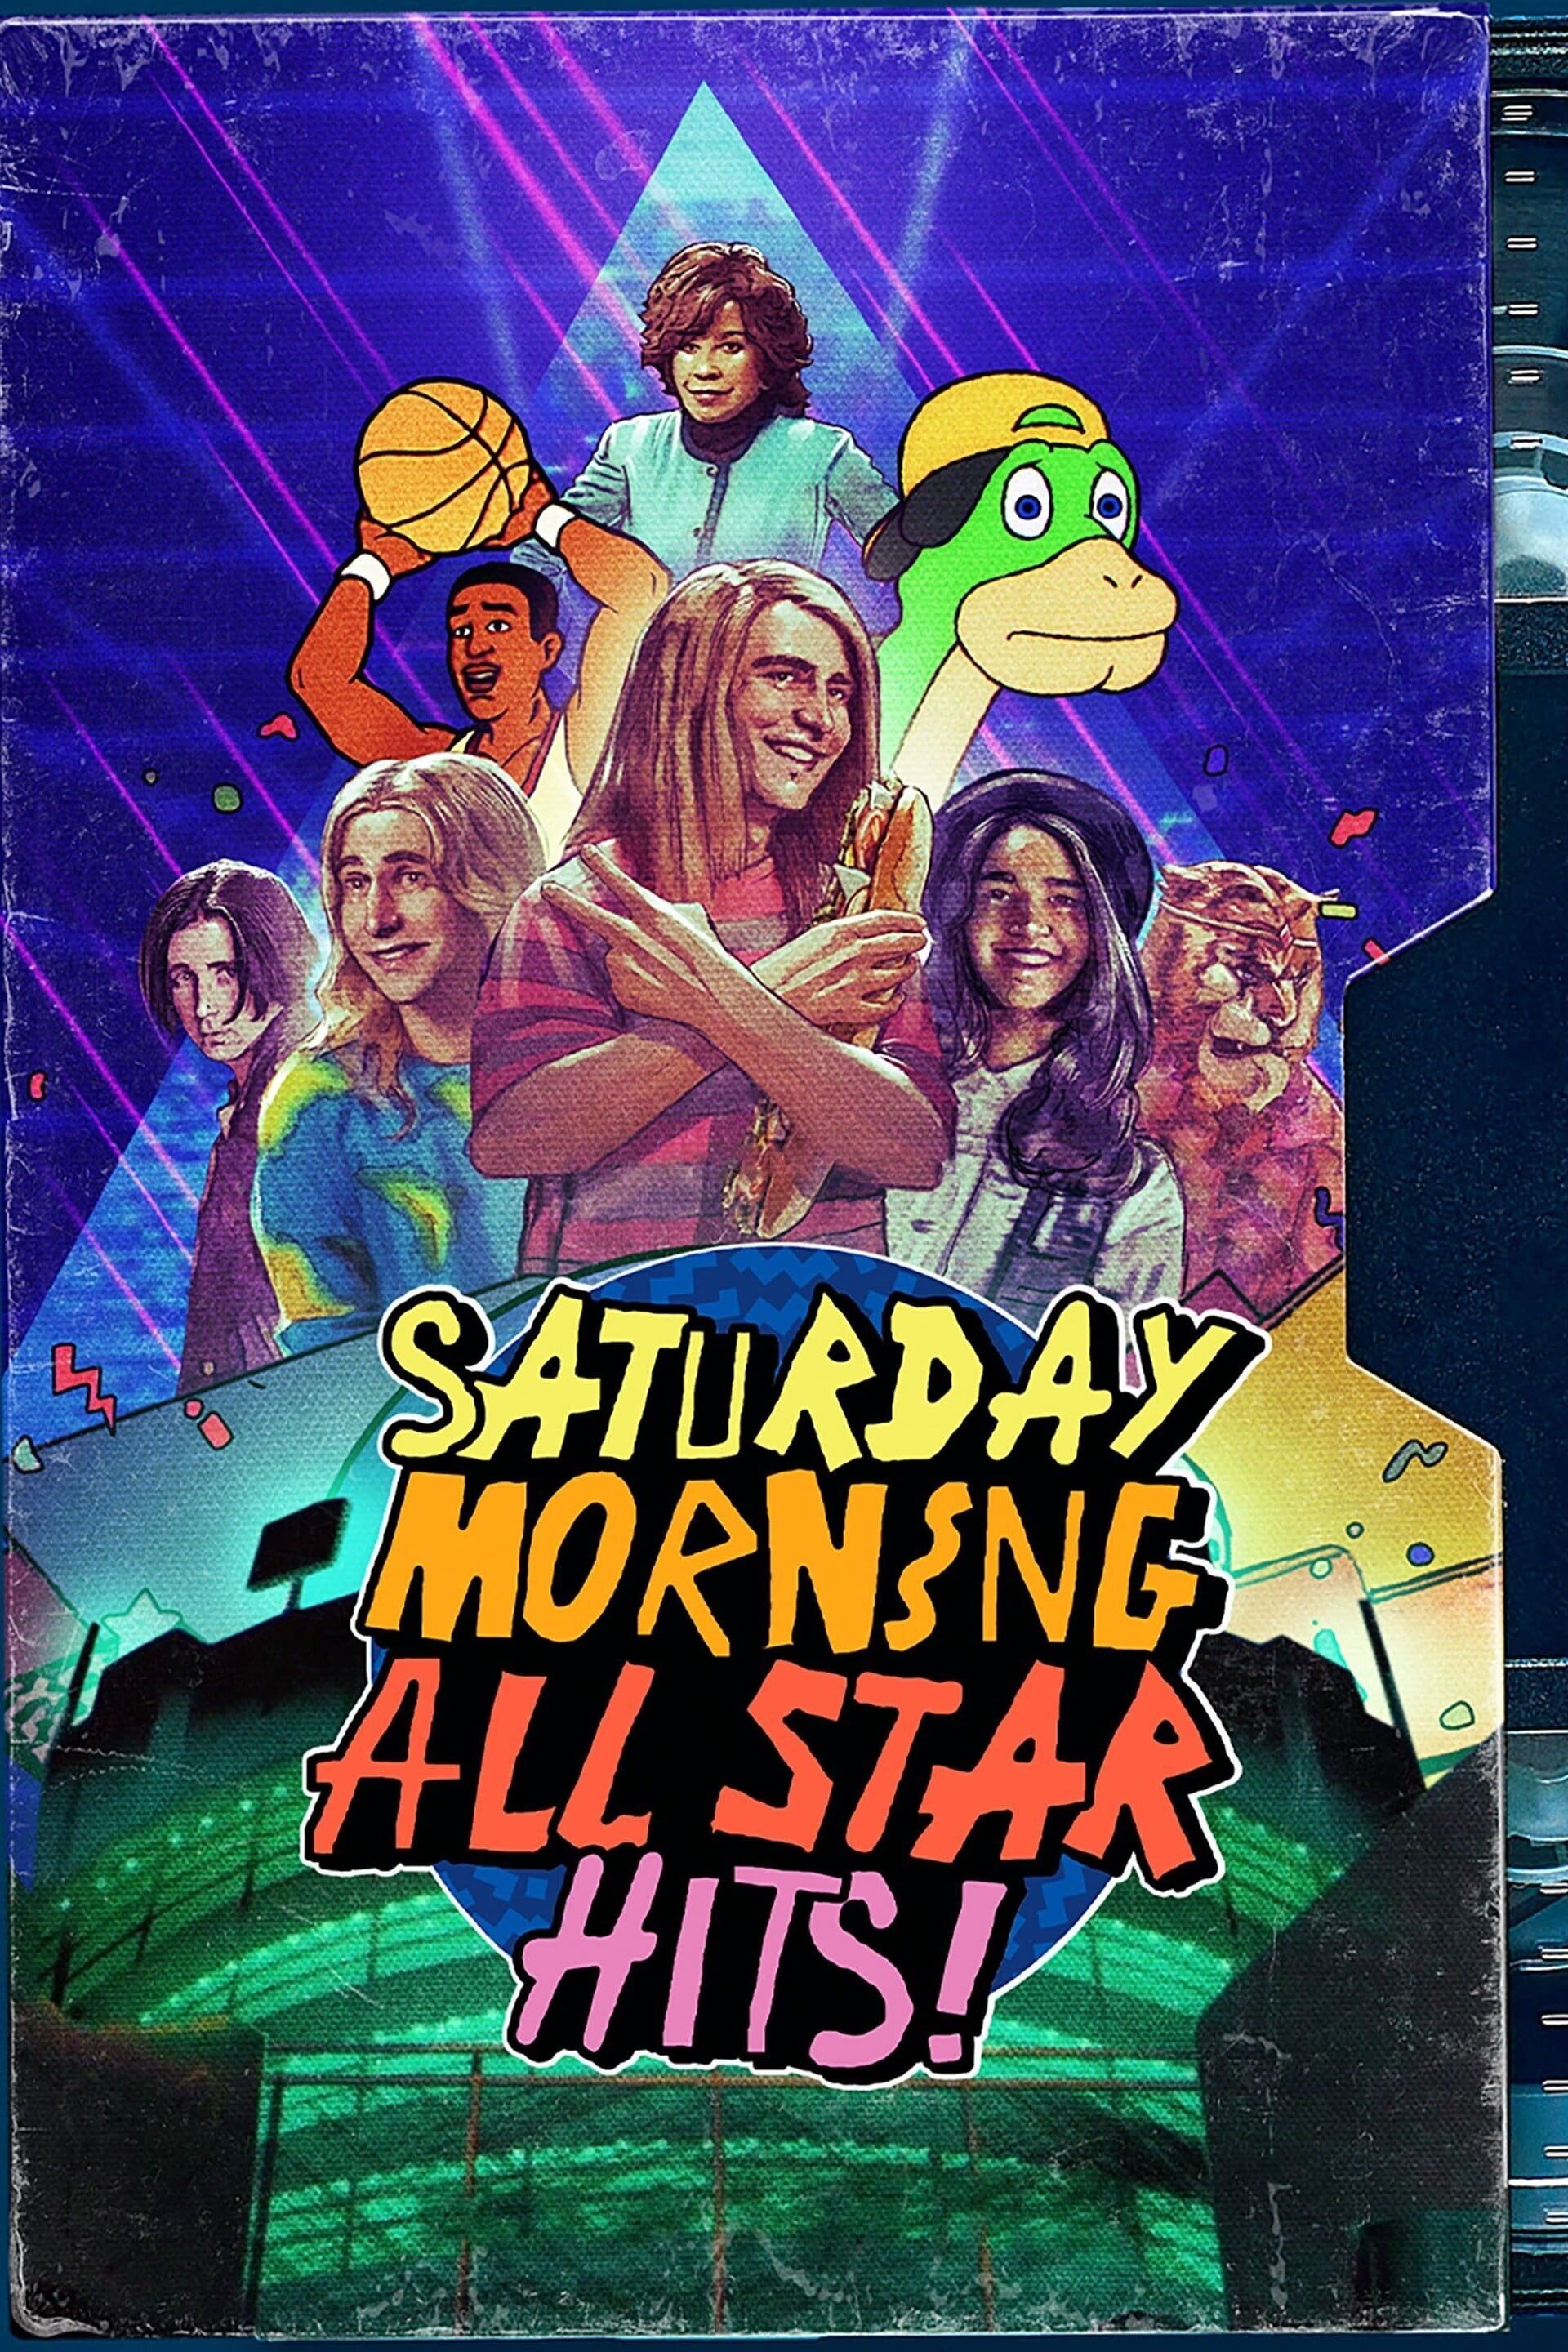 Saturday Morning All Star Hits! ne zaman